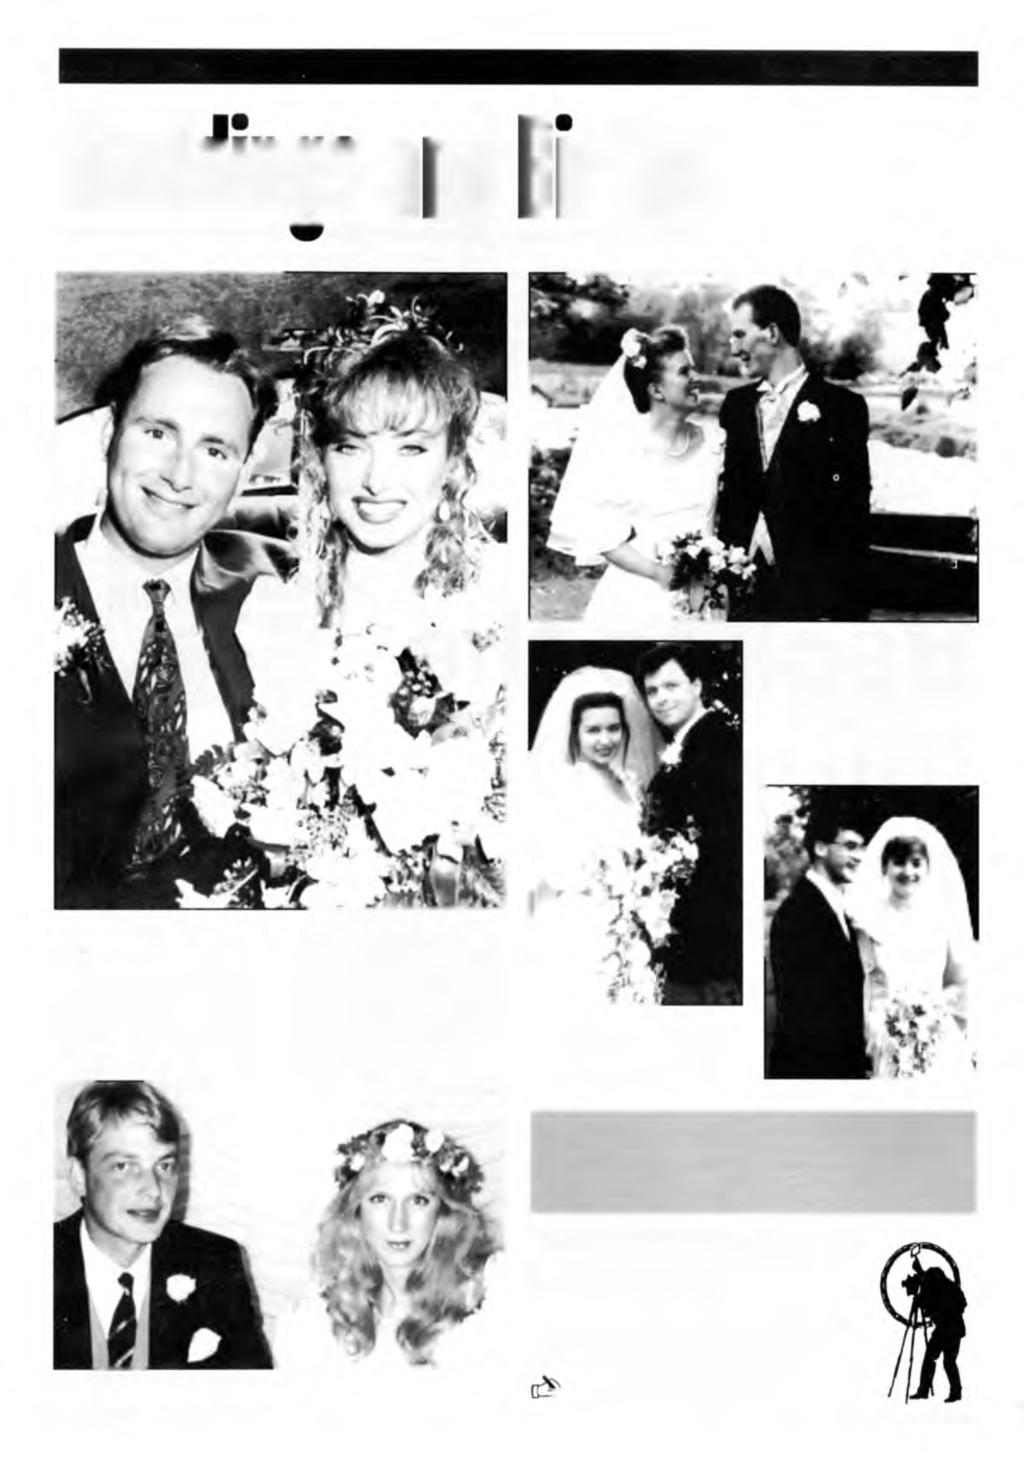 AUTUMN 1994 MAGISTKR - PAGE 31 M w art Irths Tim Brown (77-87) marriei Jo Sherry (86-88) on June 12th 1993. N icholas W. Alm ond (1979-86) married Julie A.